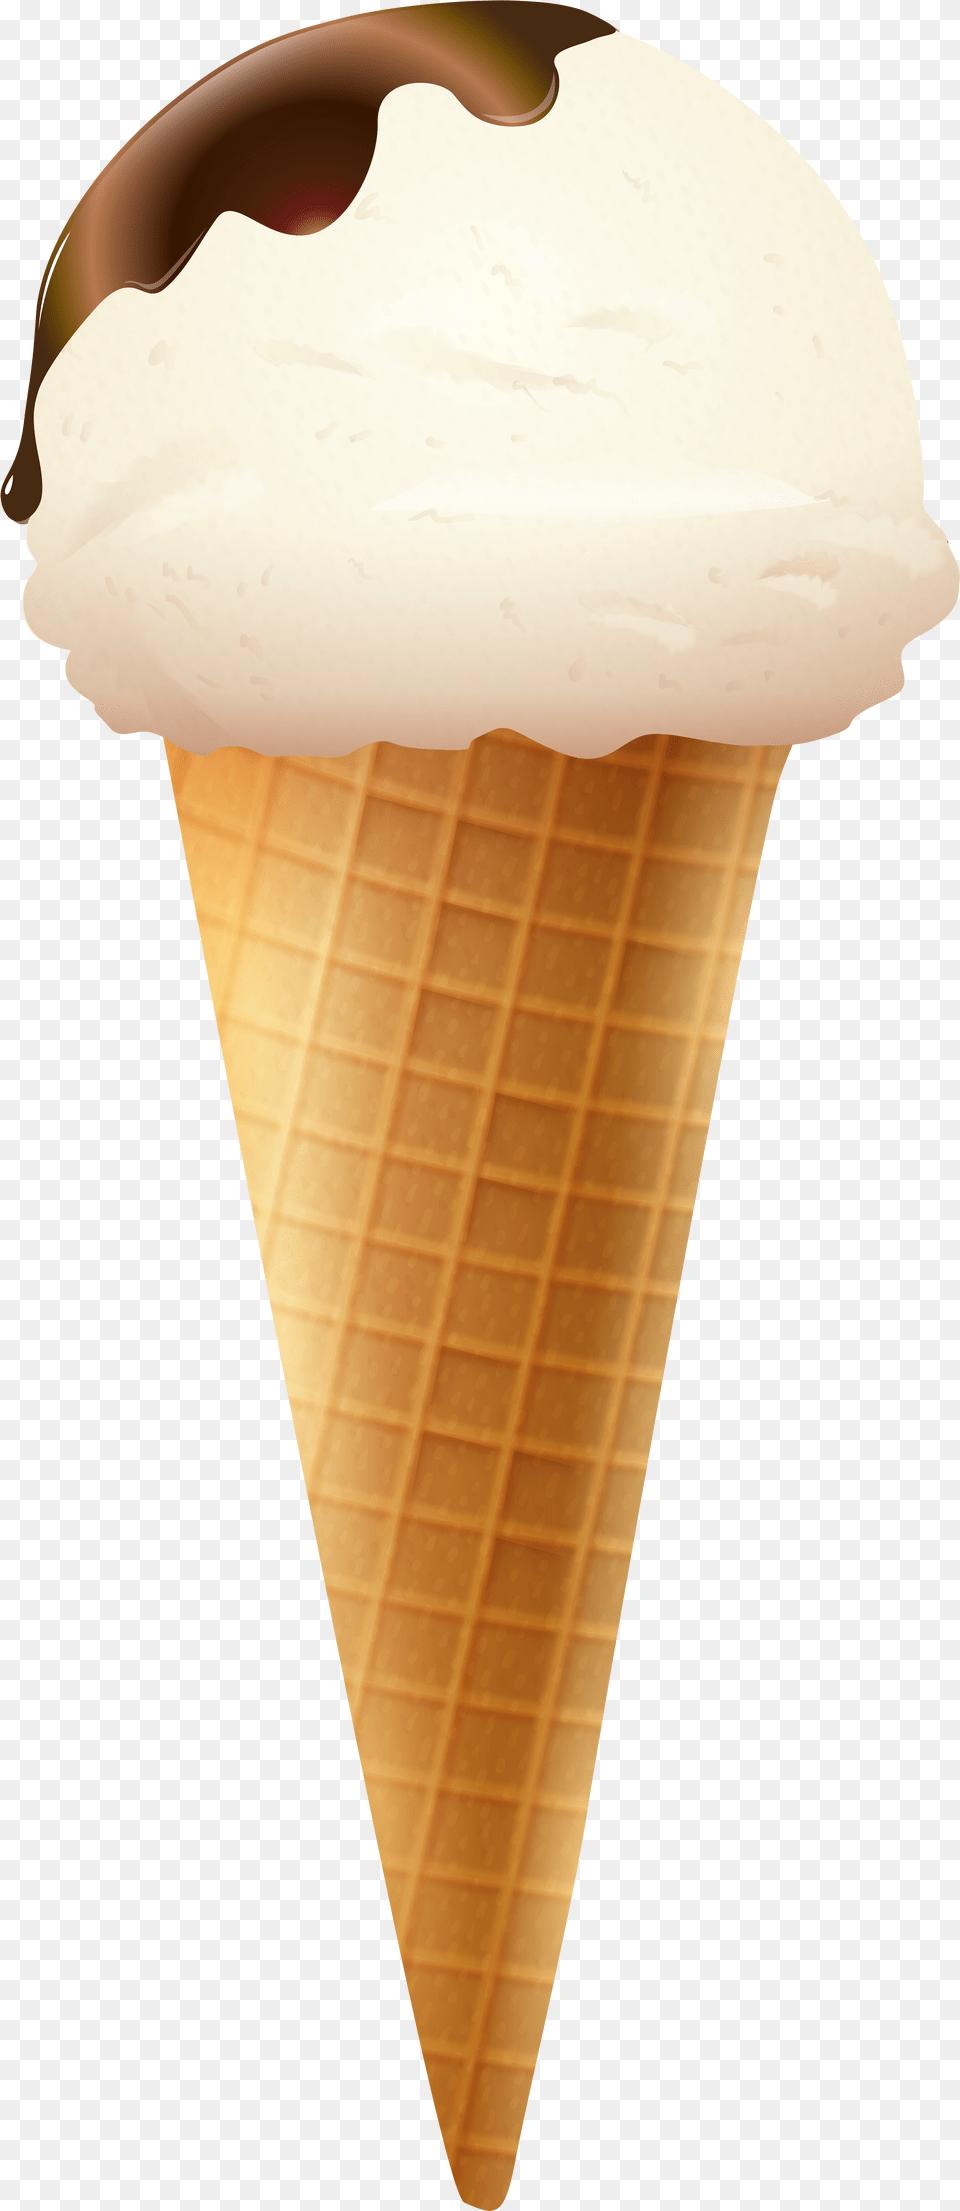 Ice Cream Cone Png Image